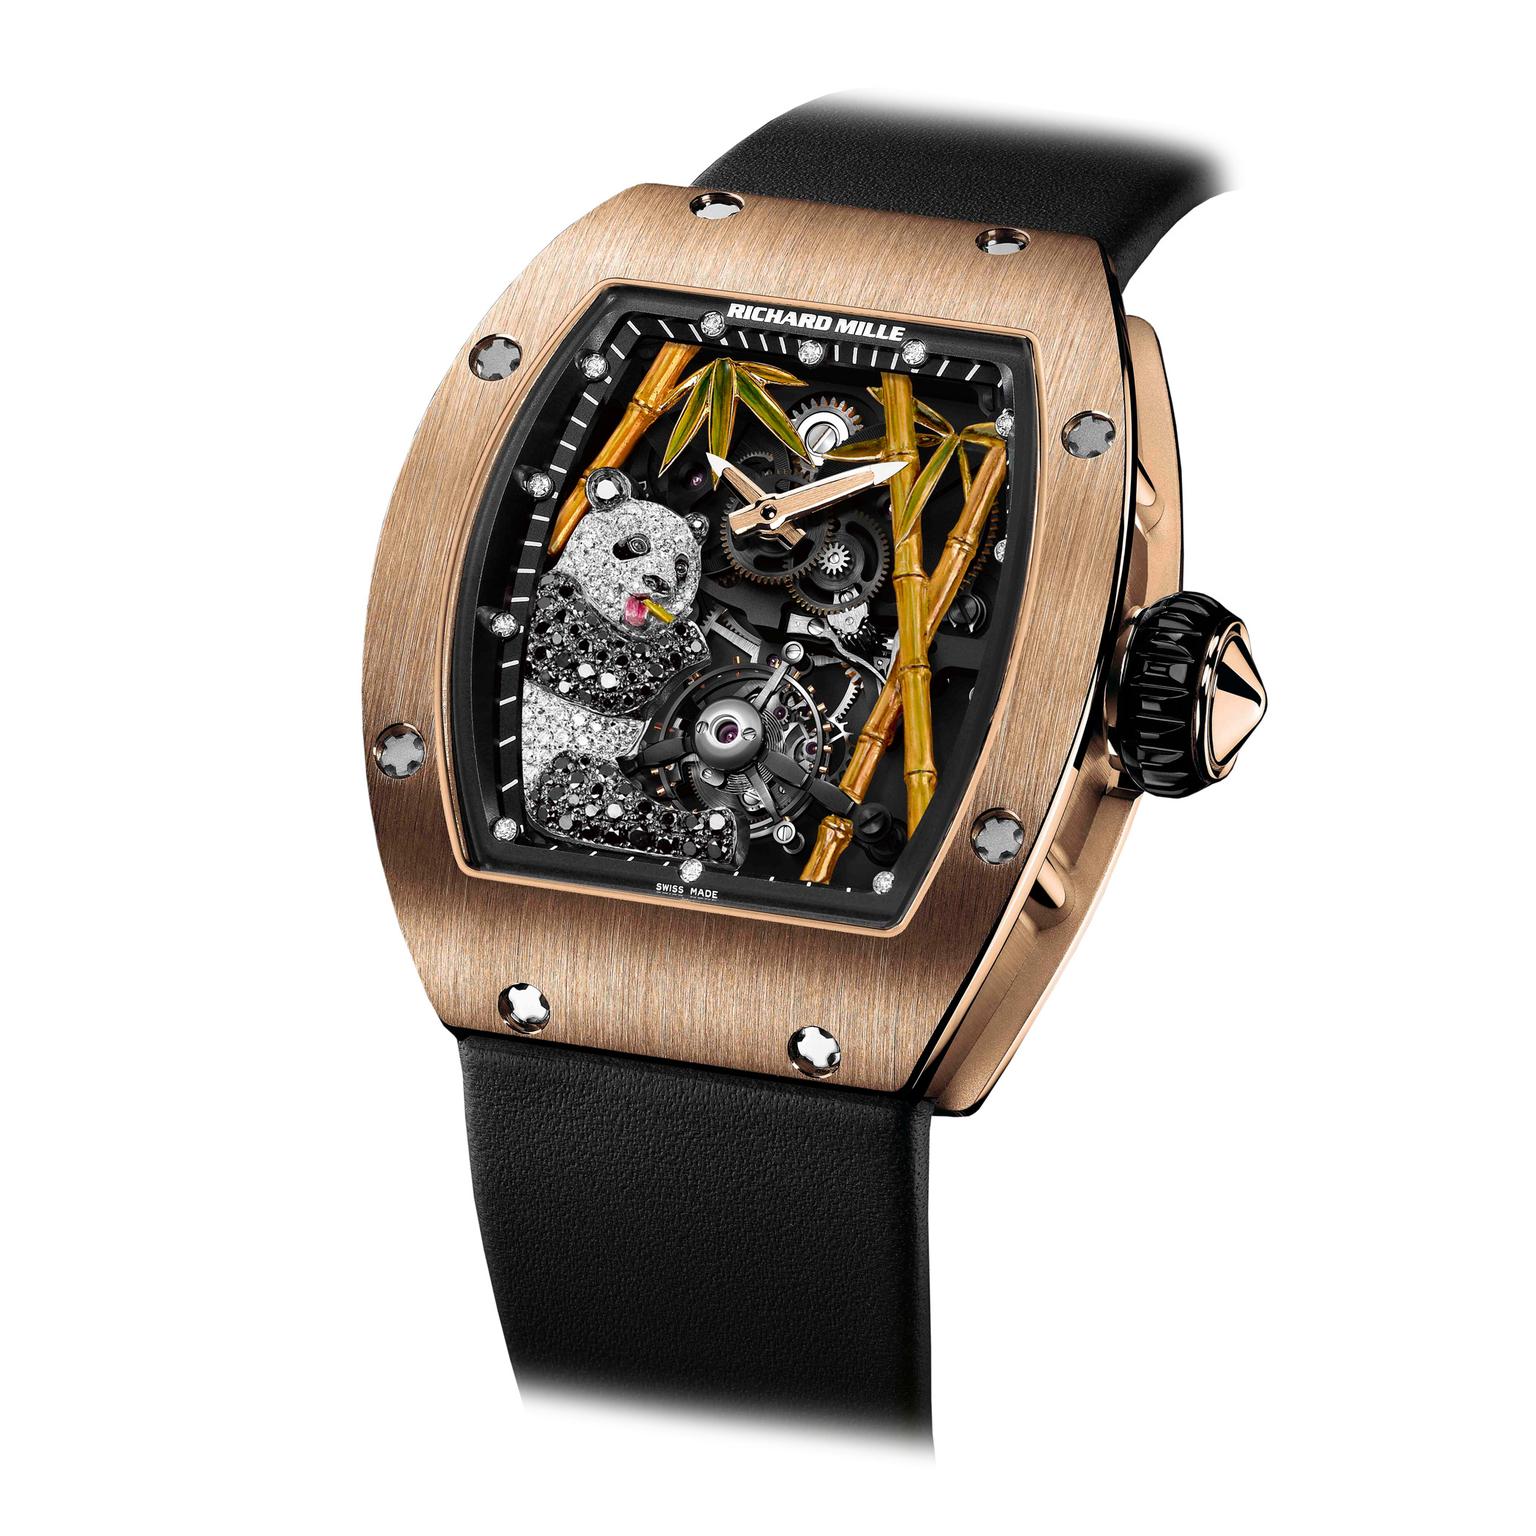 Richard Mille RM 67 Men's Black Watch - 6701 for sale online | eBay